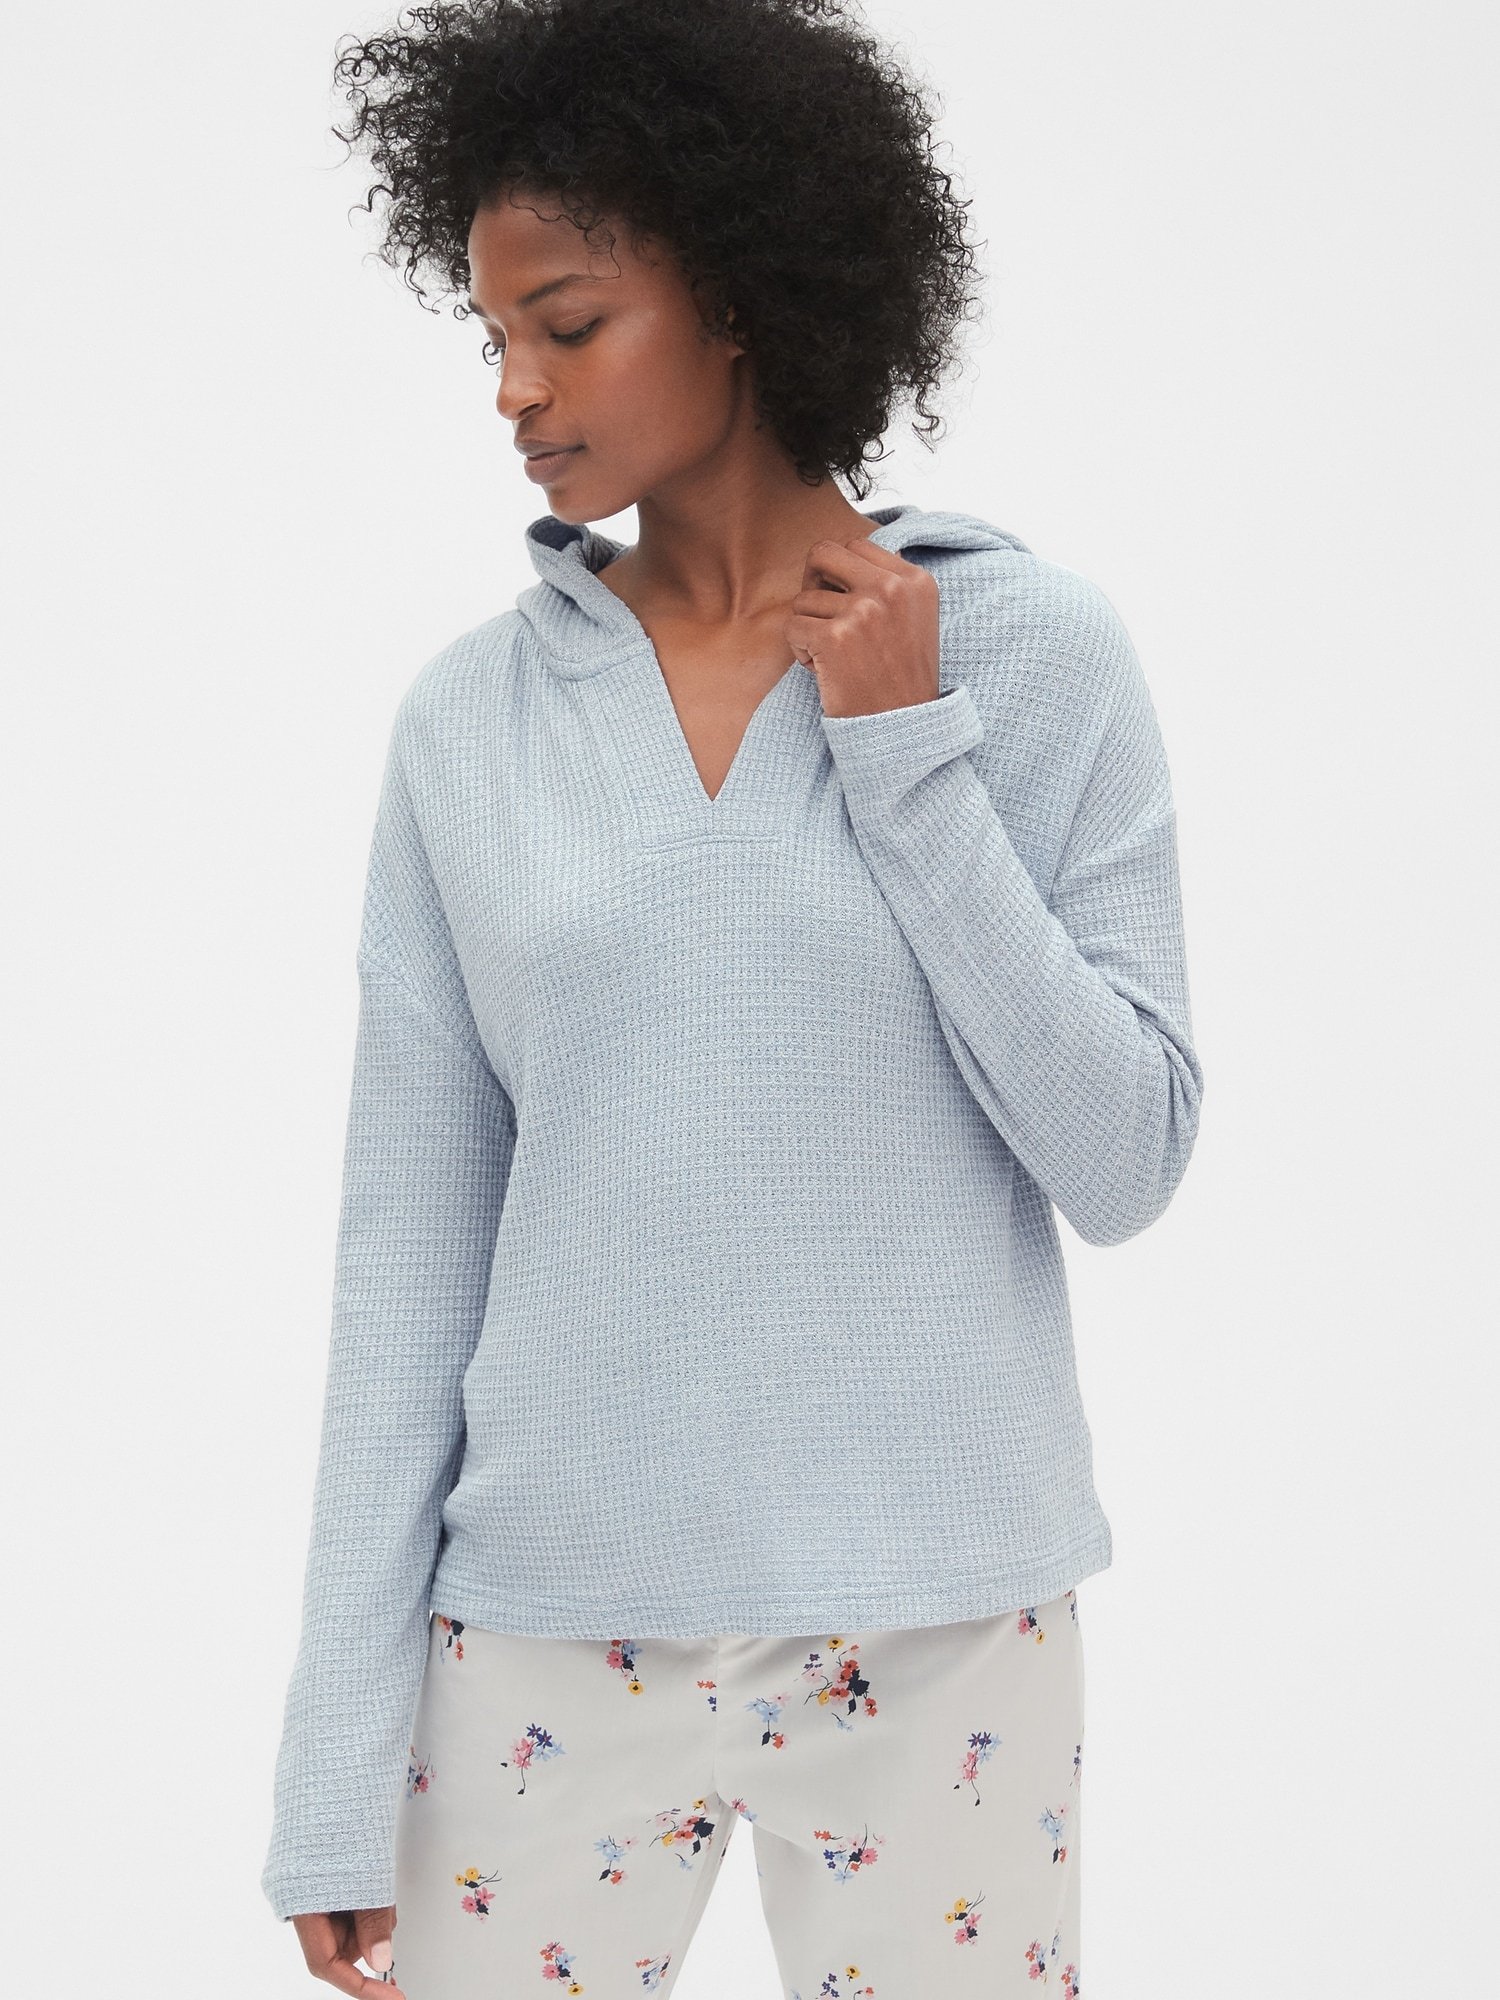 Kadın Örme Kapüşonlu Sweatshirt product image